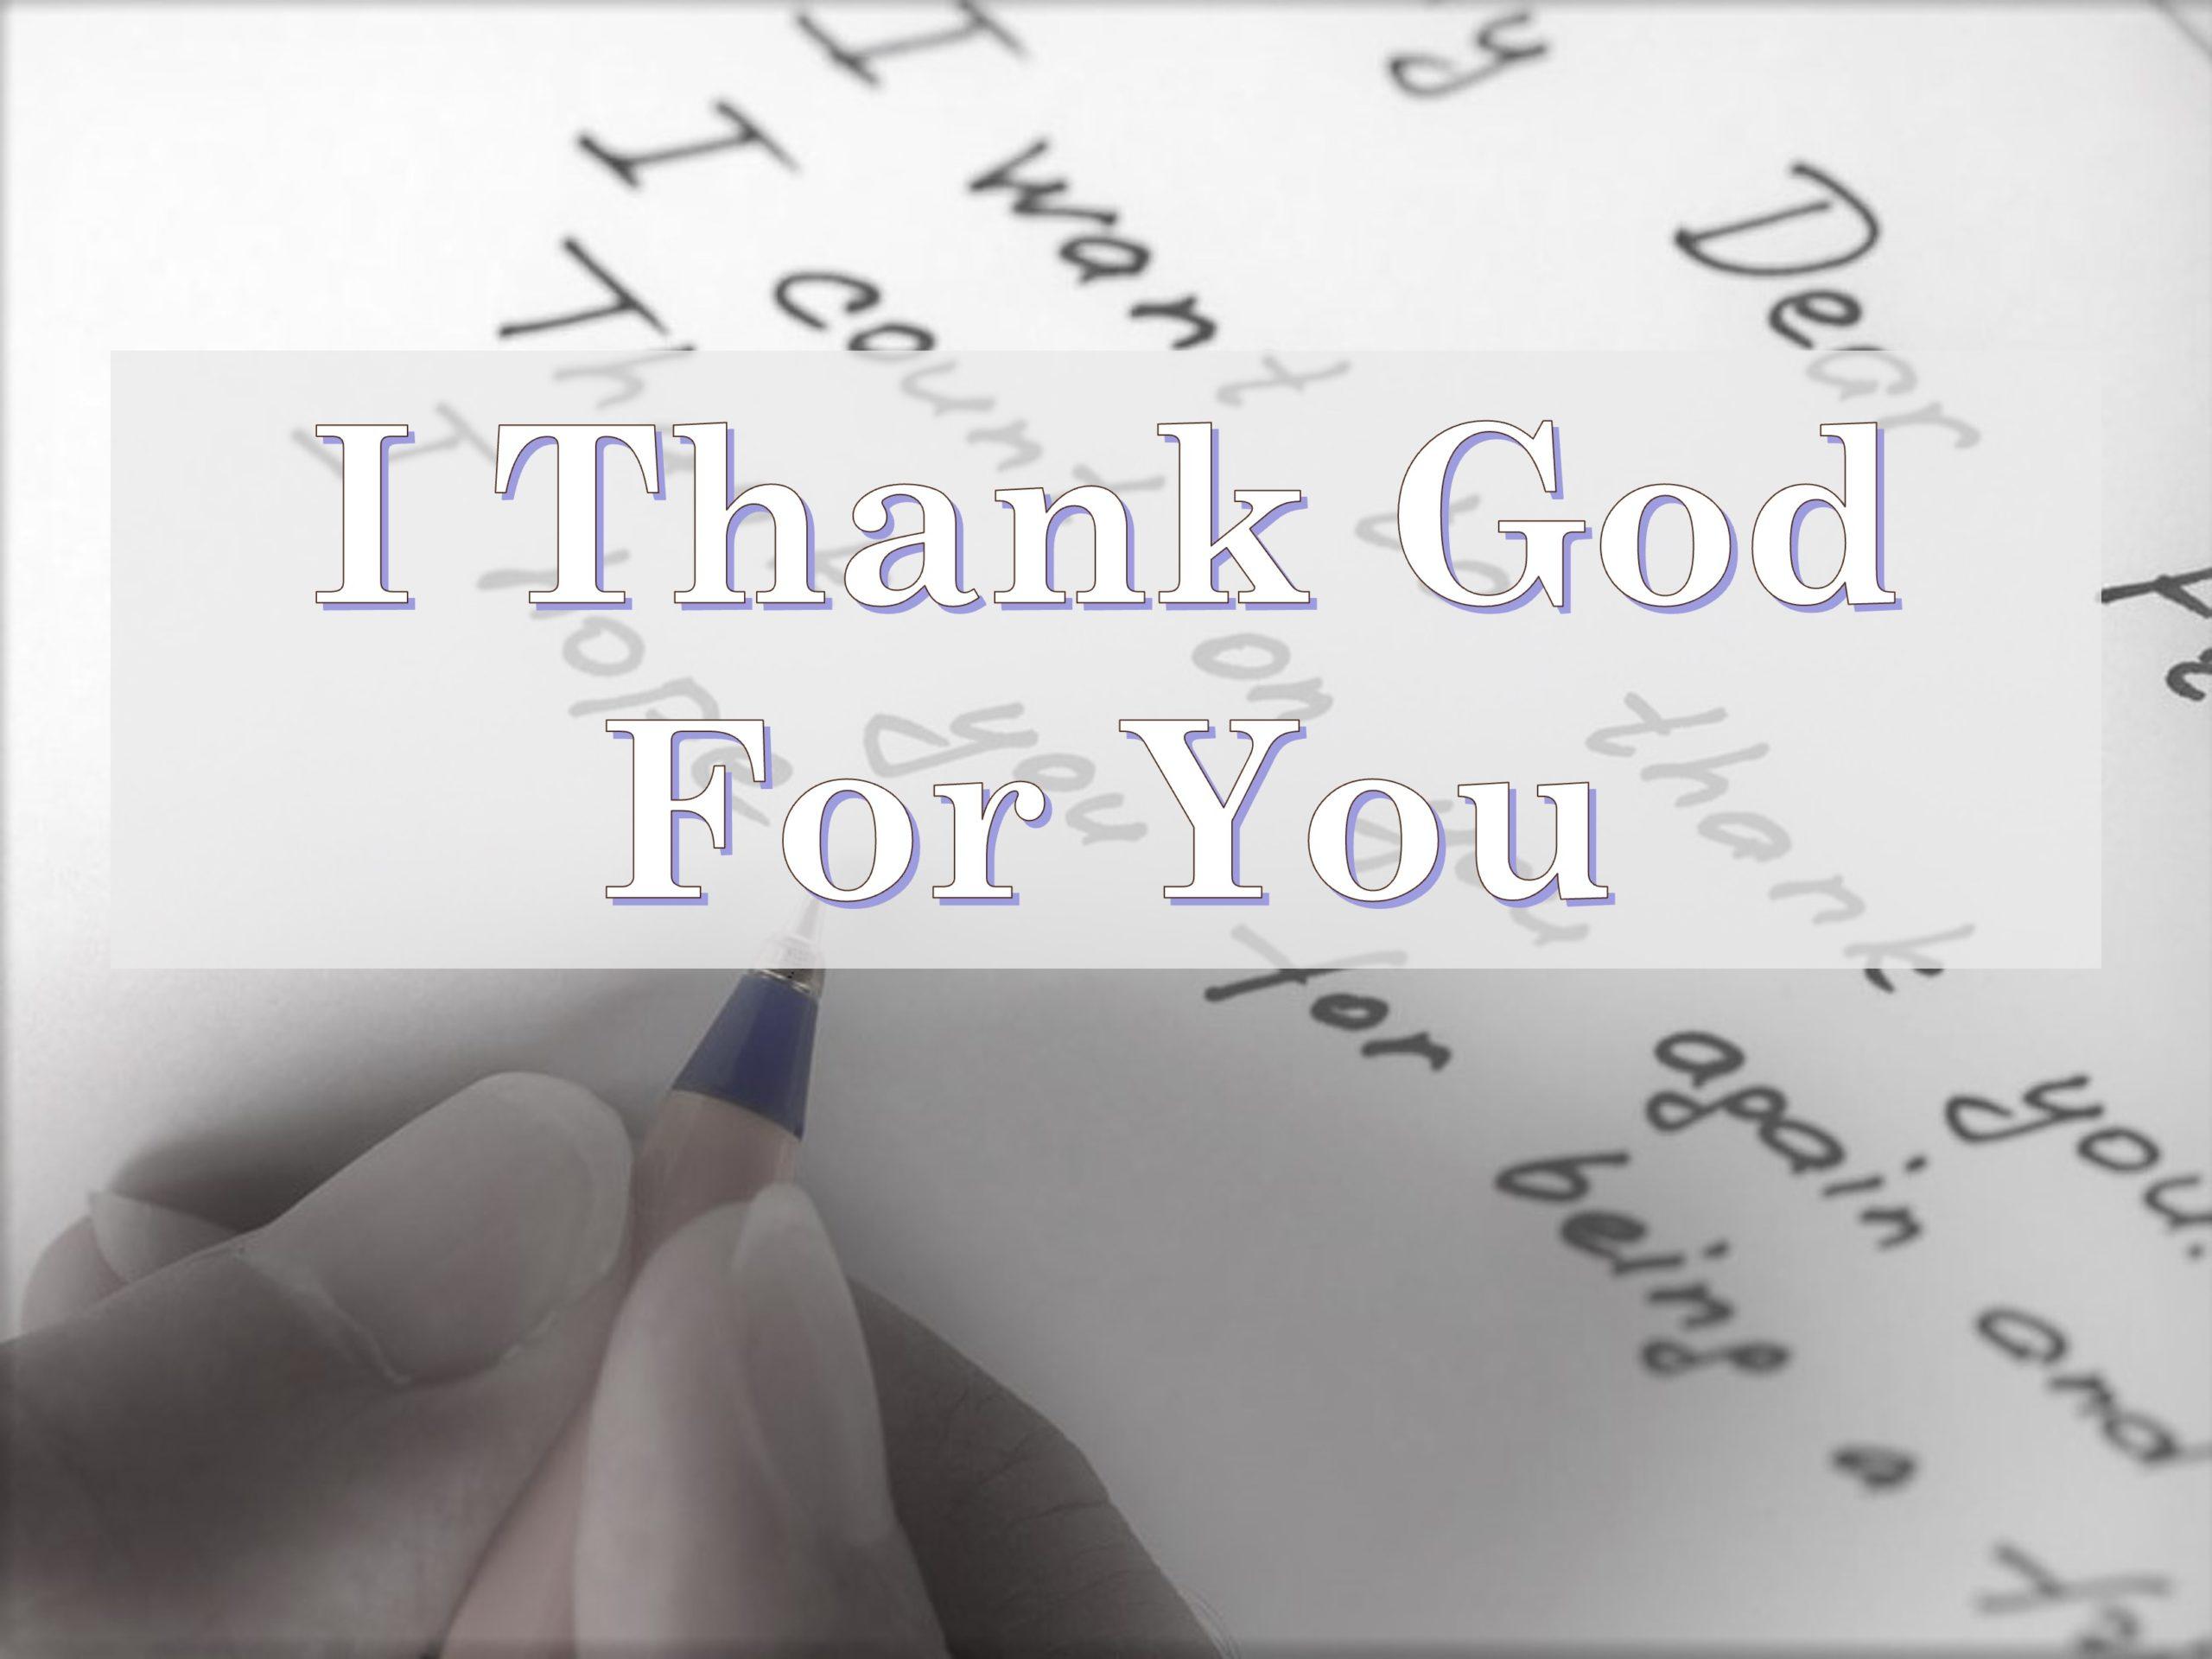 I Thank God For You